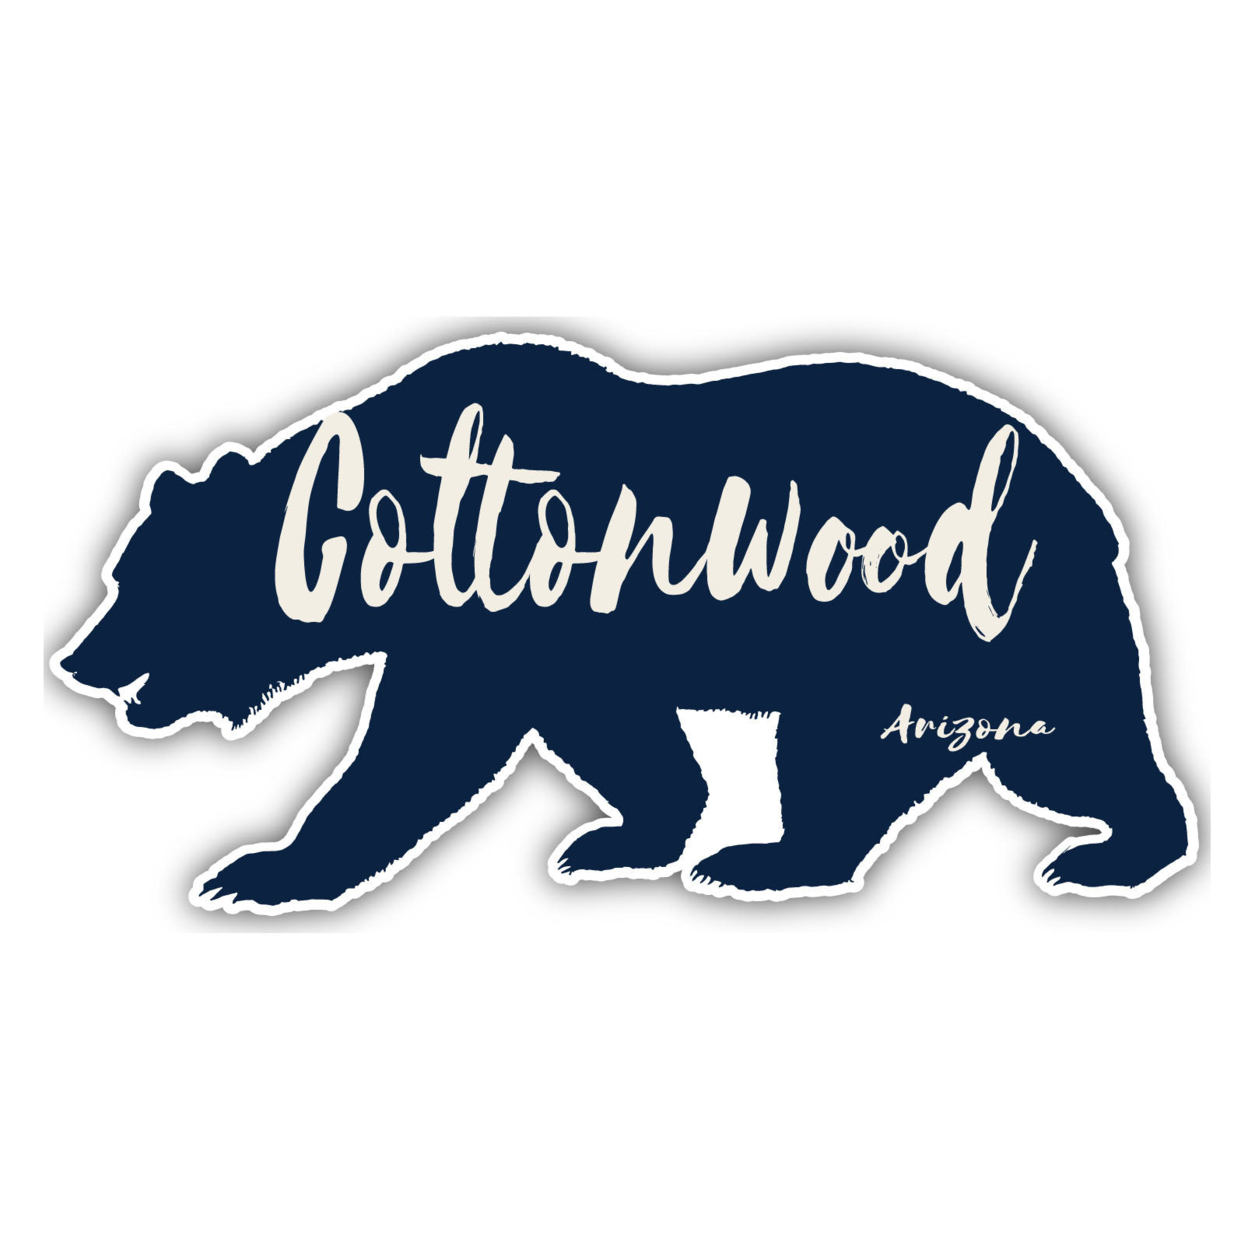 Cottonwood Arizona Souvenir Decorative Stickers (Choose Theme And Size) - Single Unit, 2-Inch, Camp Life